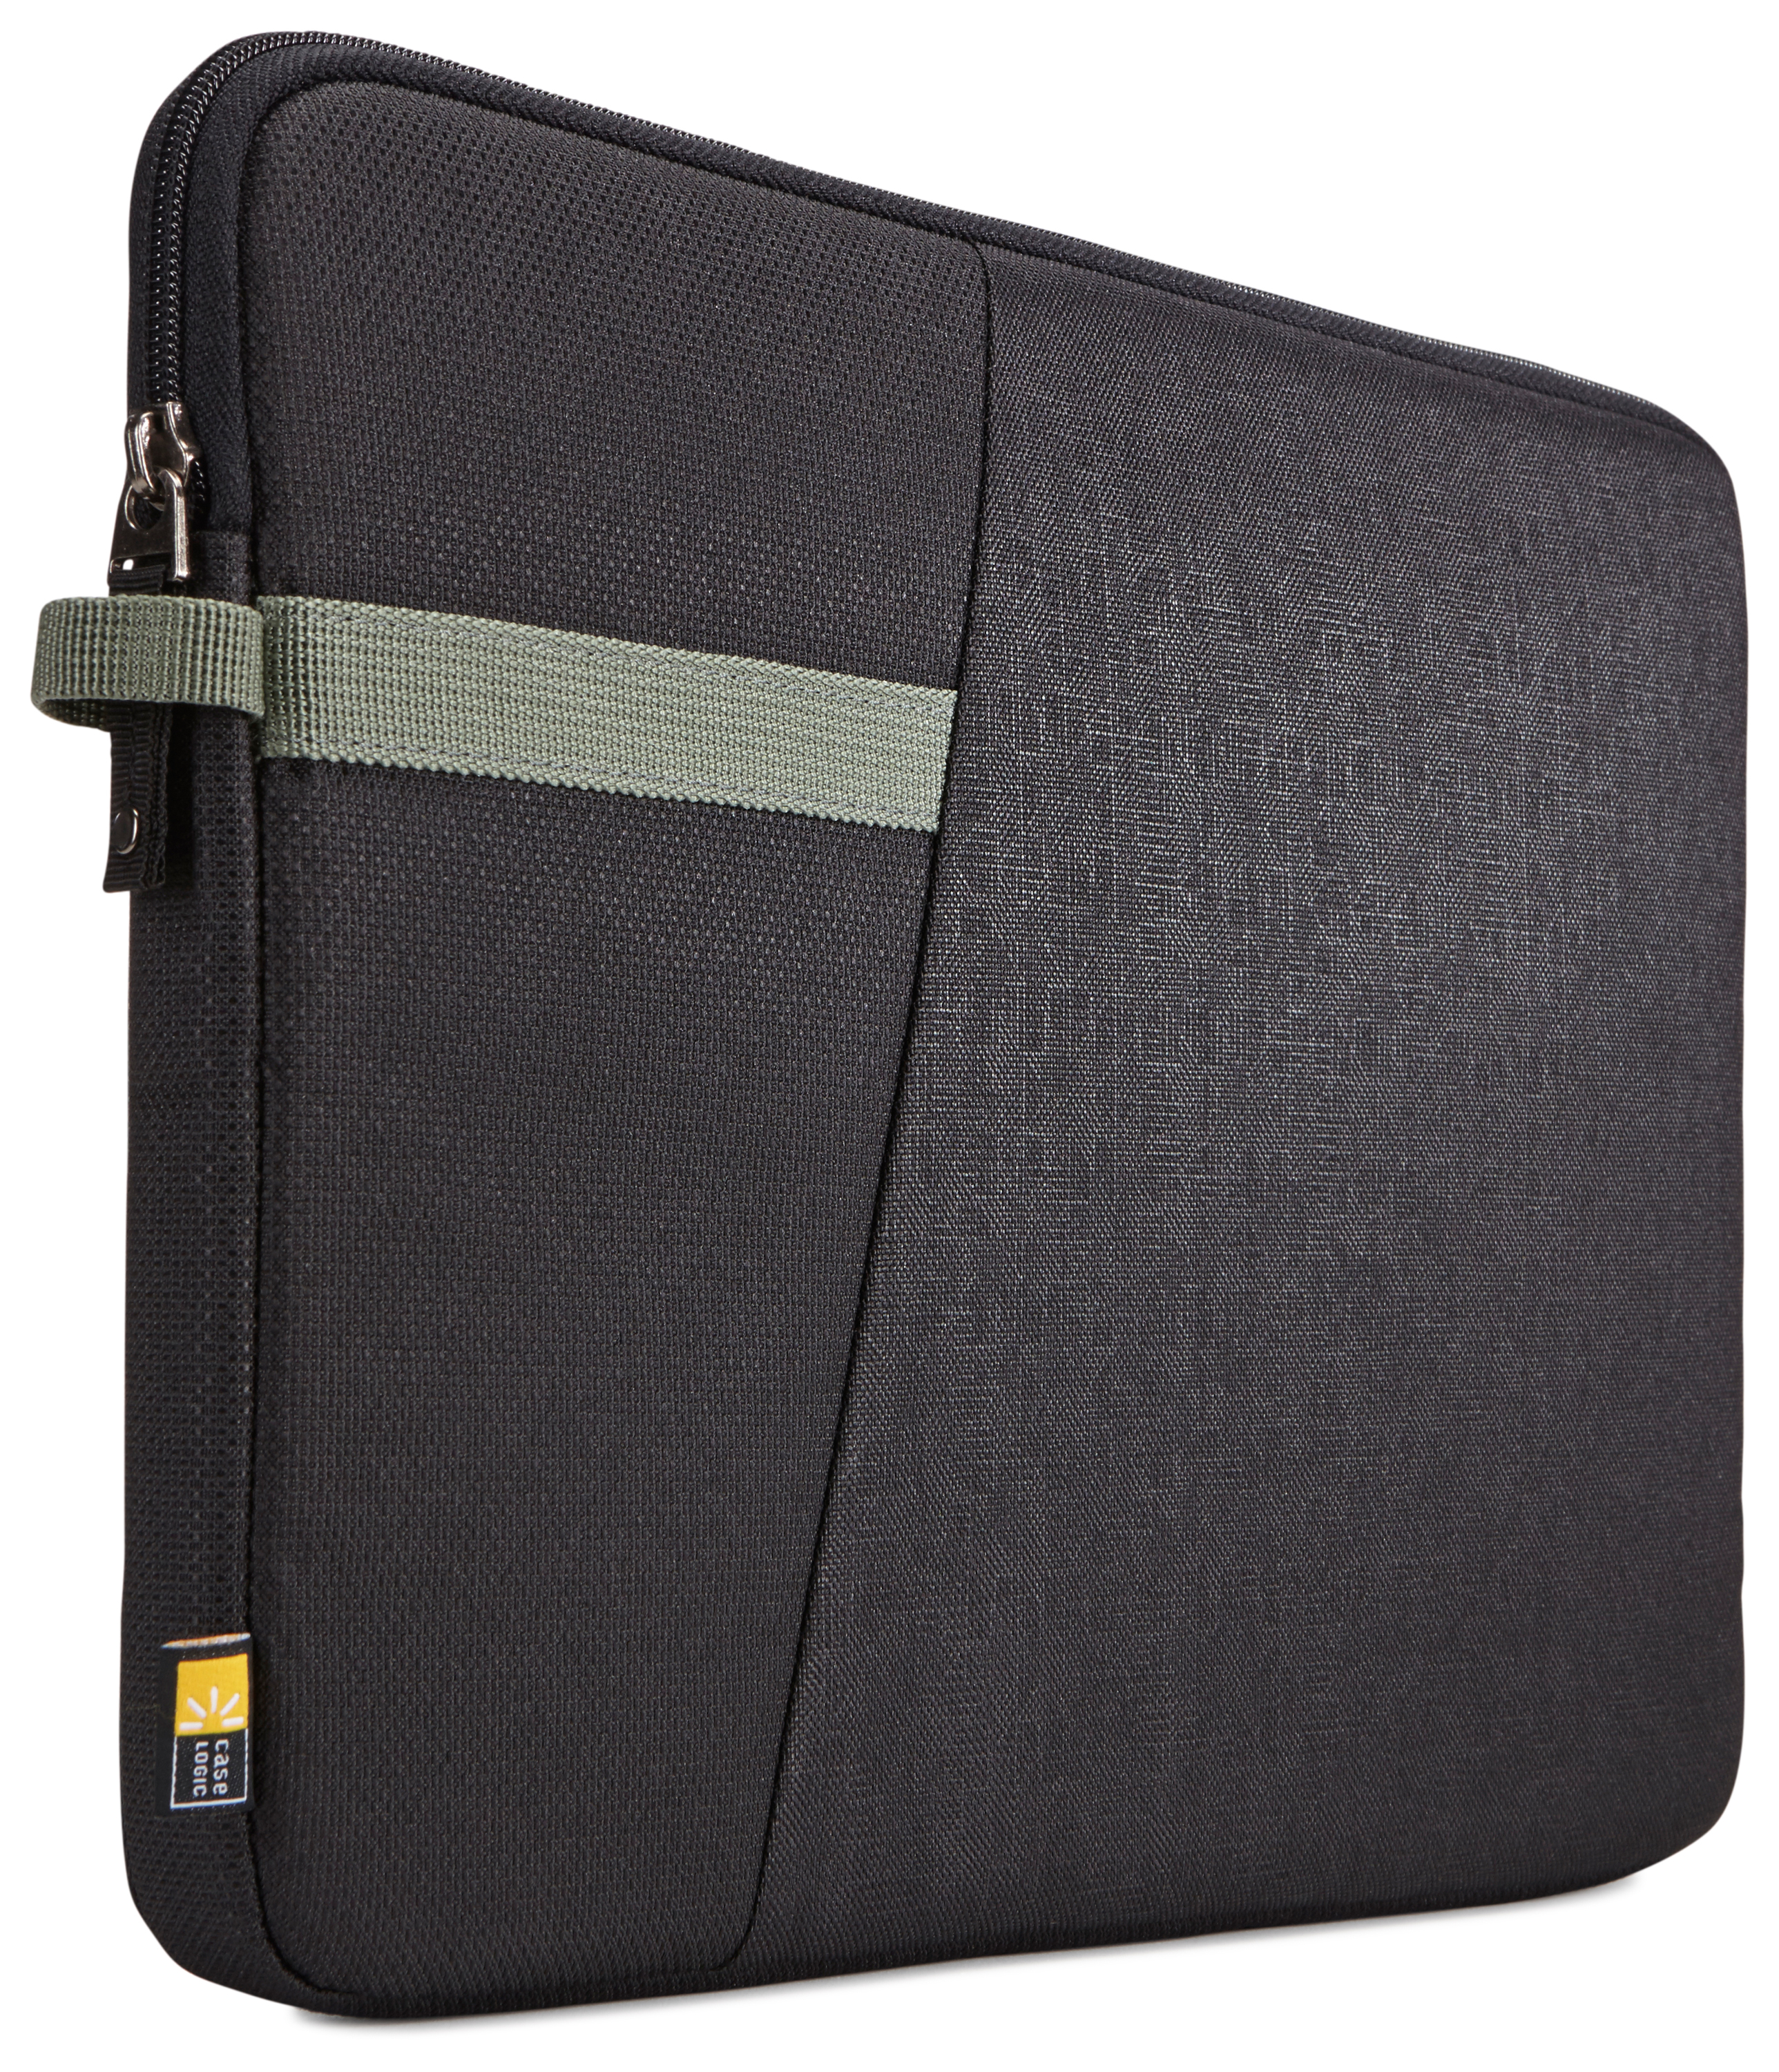 Case Logic Ibira Laptop Sleeve Black Macbook Pro/Air 13